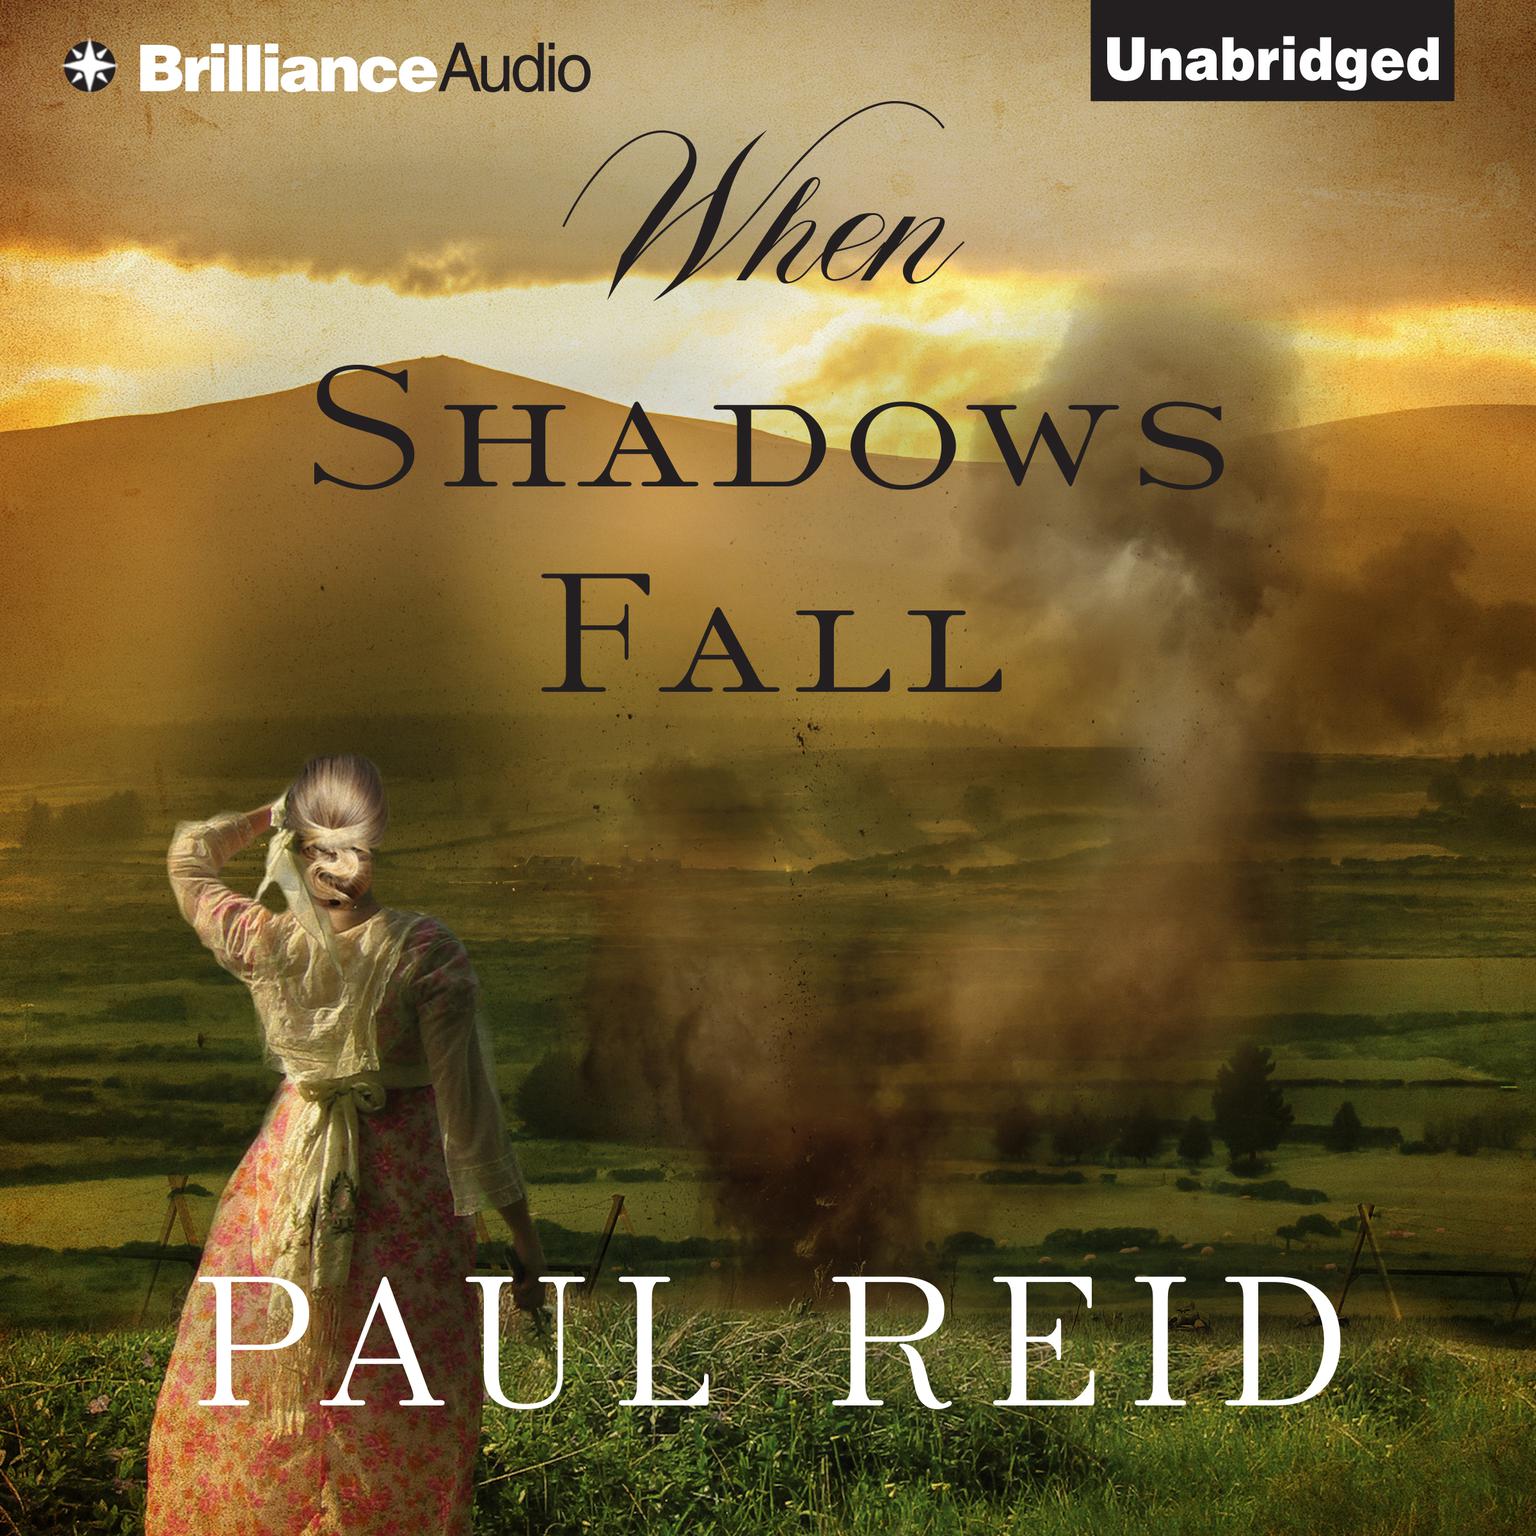 When Shadows Fall Audiobook, by Paul Reid